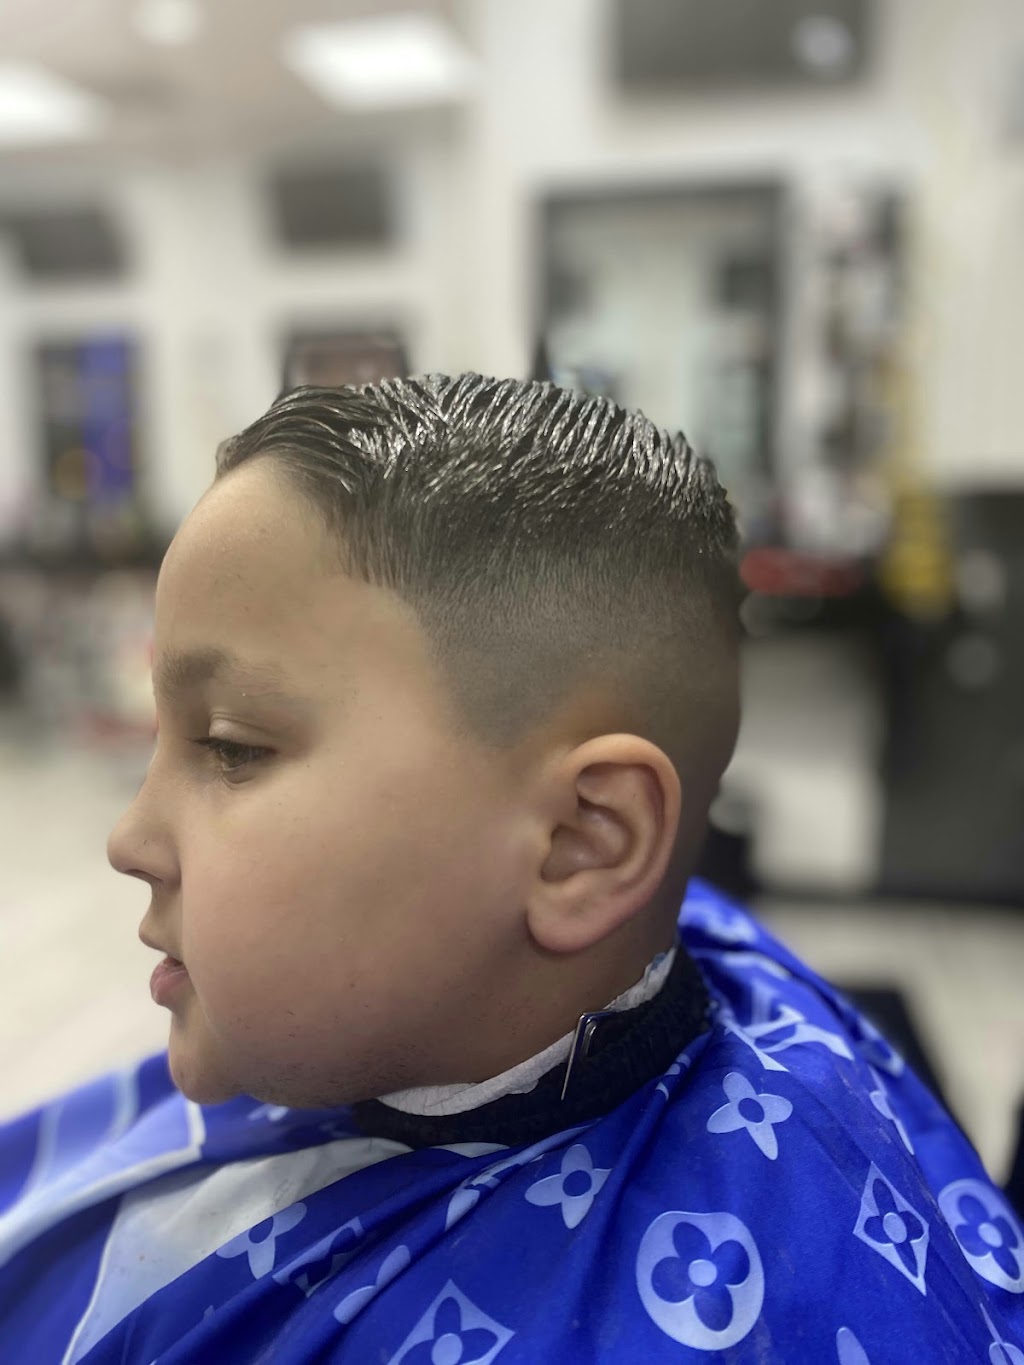 The culon barbershop | 124 Heyward St, Brentwood, NY 11717 | Phone: (631) 579-1763